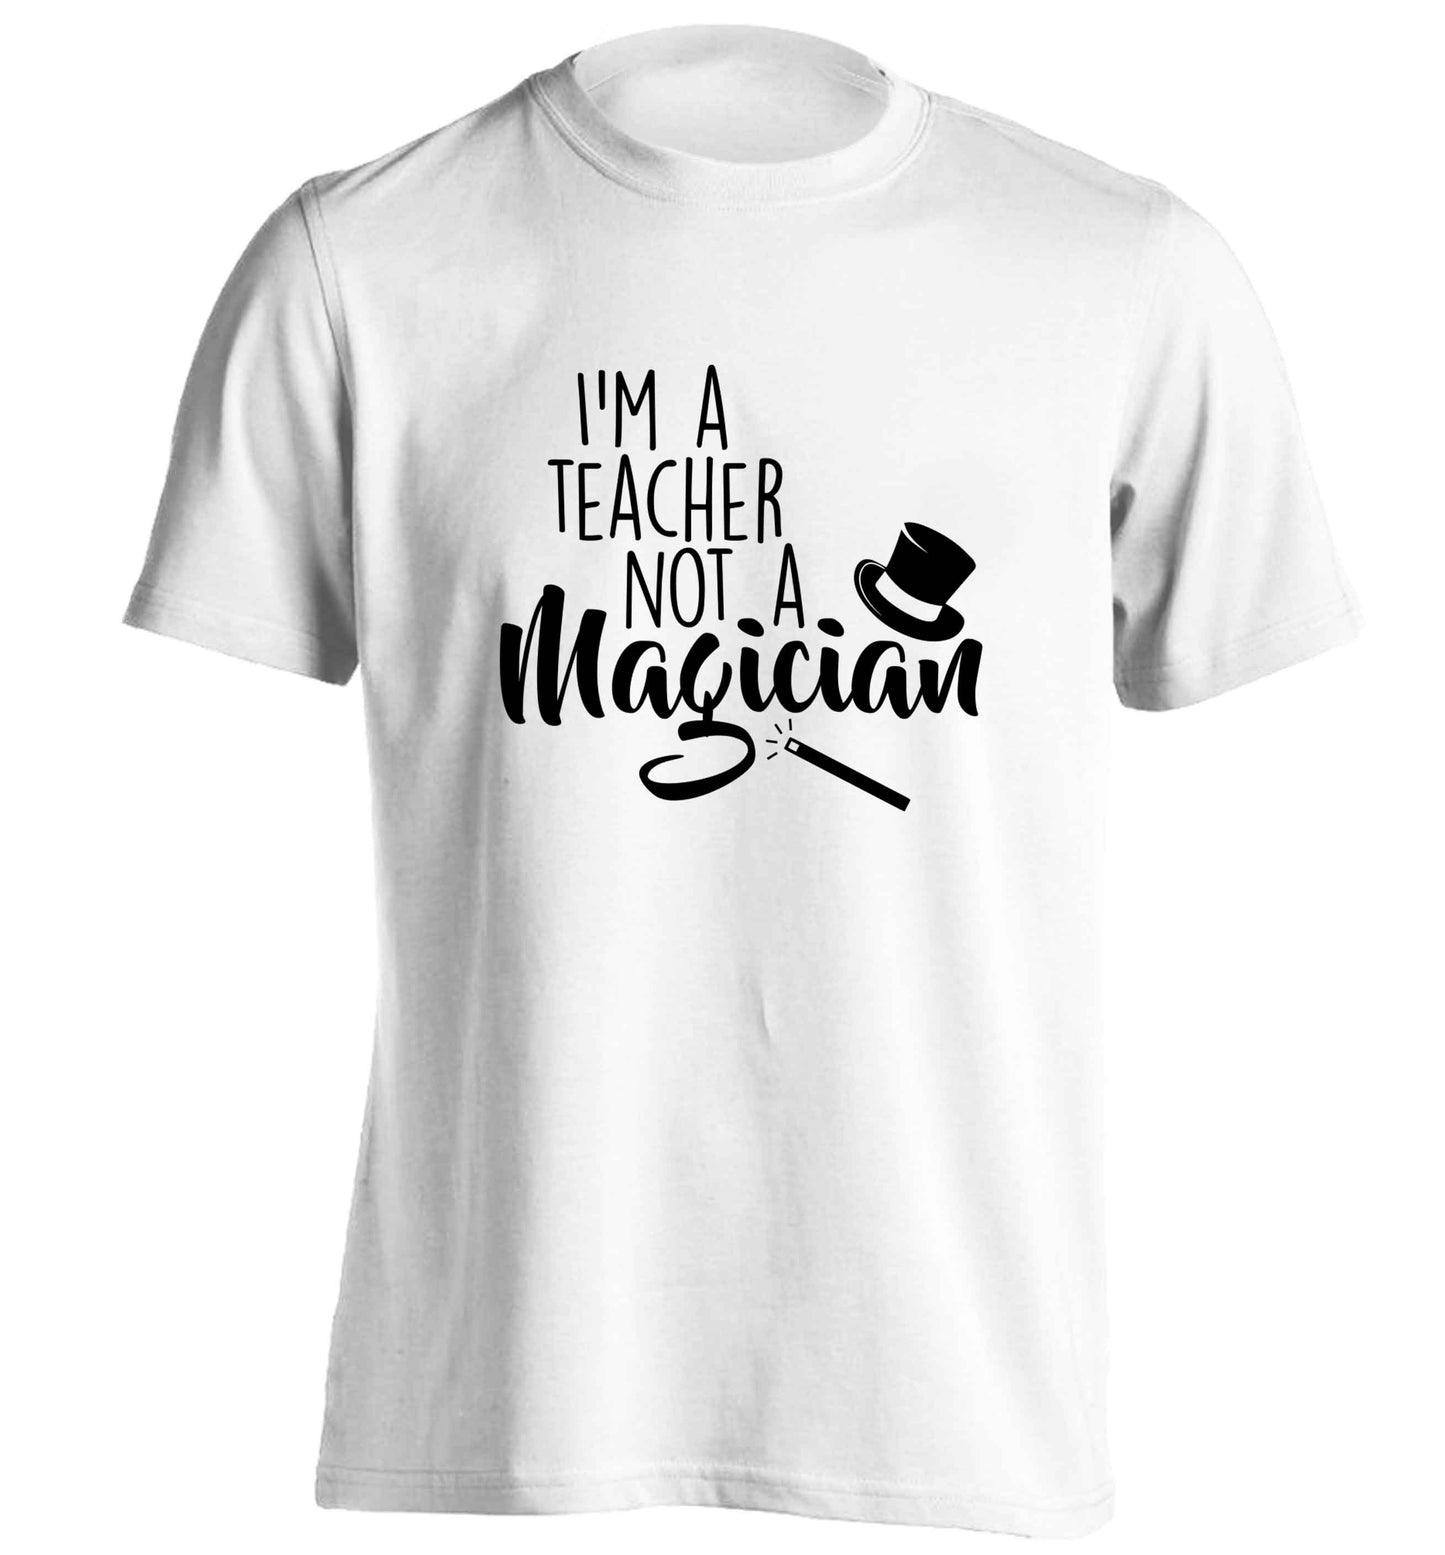 I'm a teacher not a magician adults unisex white Tshirt 2XL